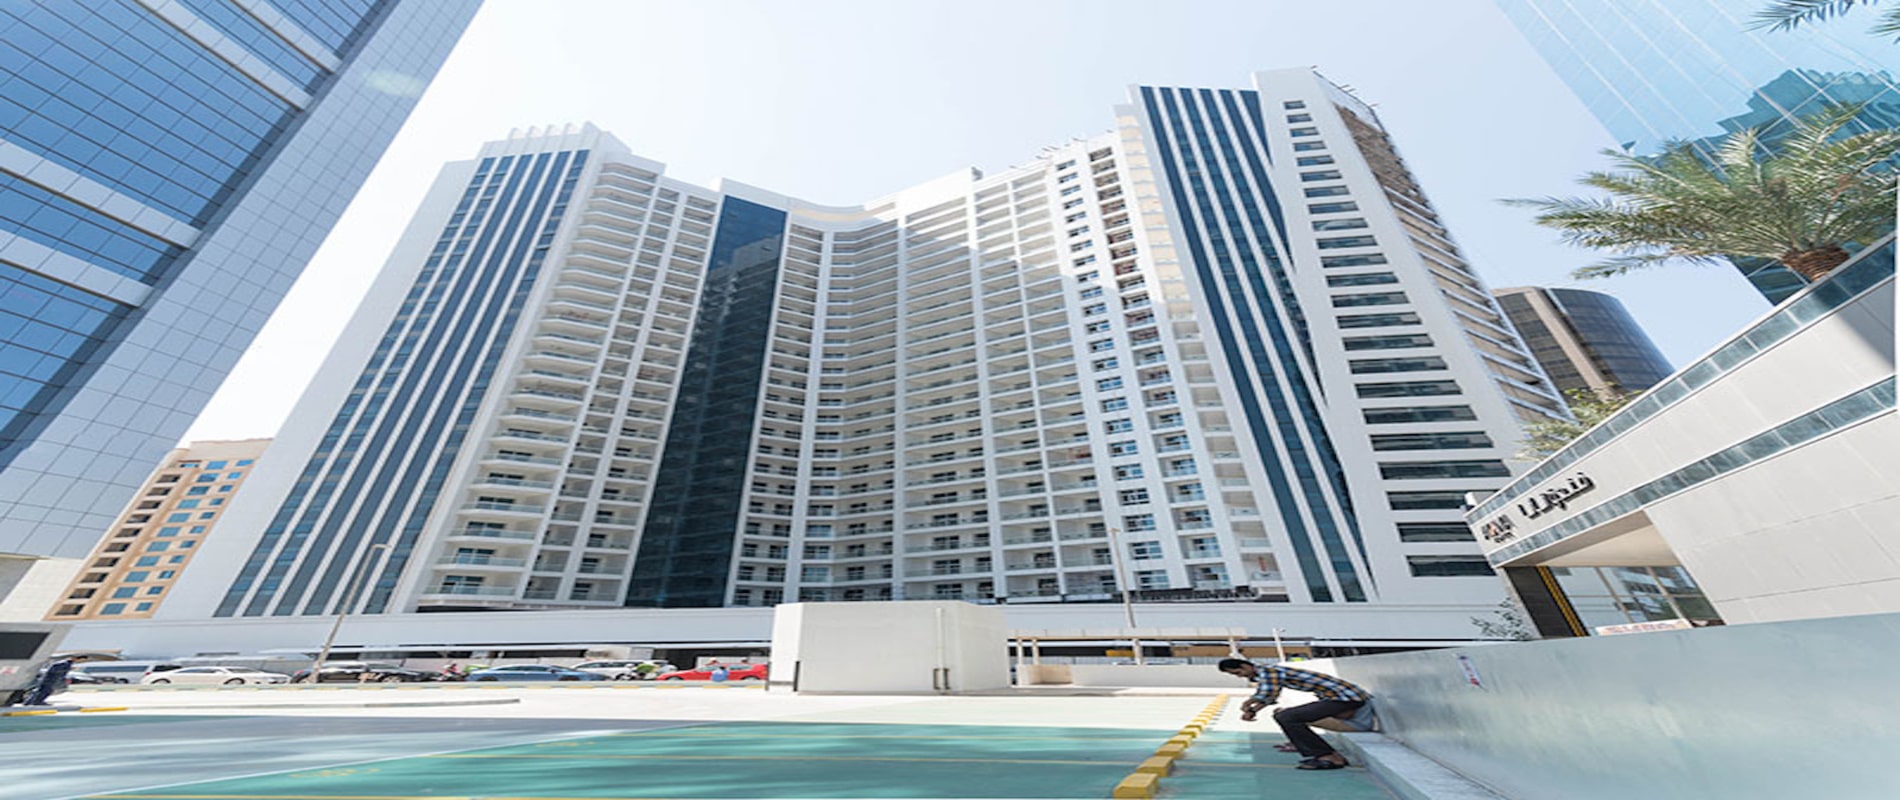 Al Fahad 2 apartments - Barsha Heights Dubai.